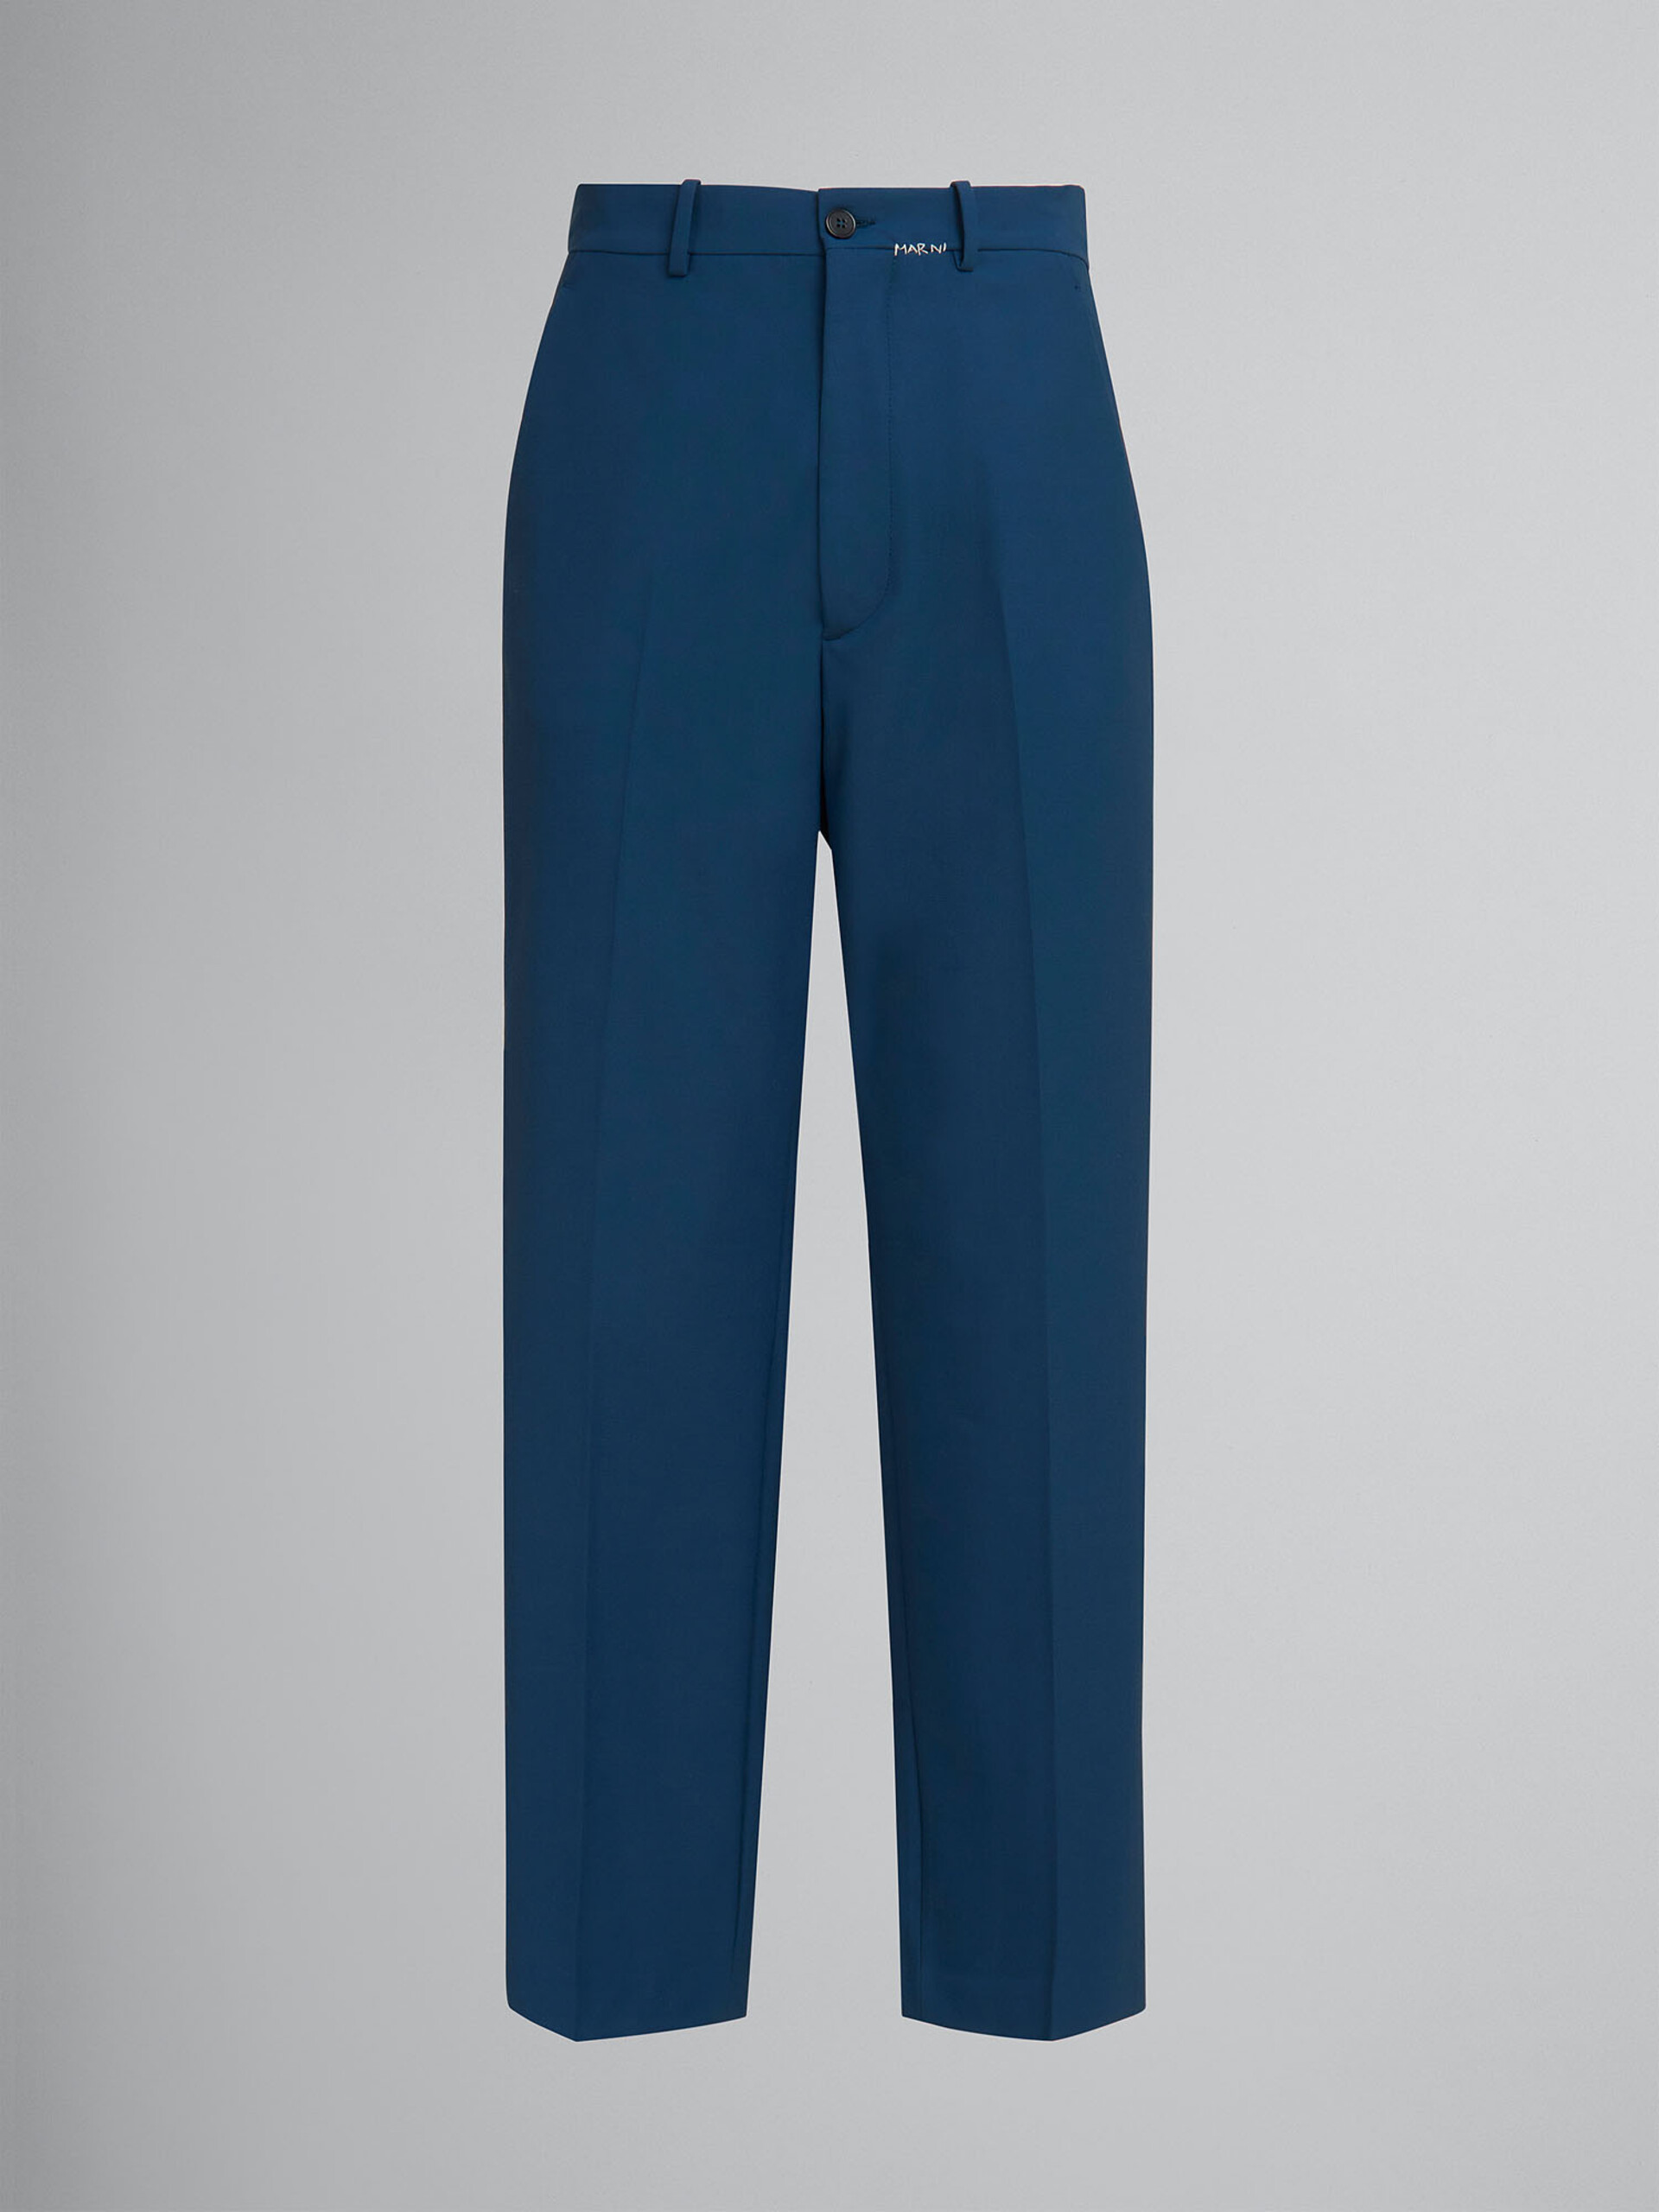 Pantaloni in lana blu con logo rammendo Marni - Pantaloni - Image 1